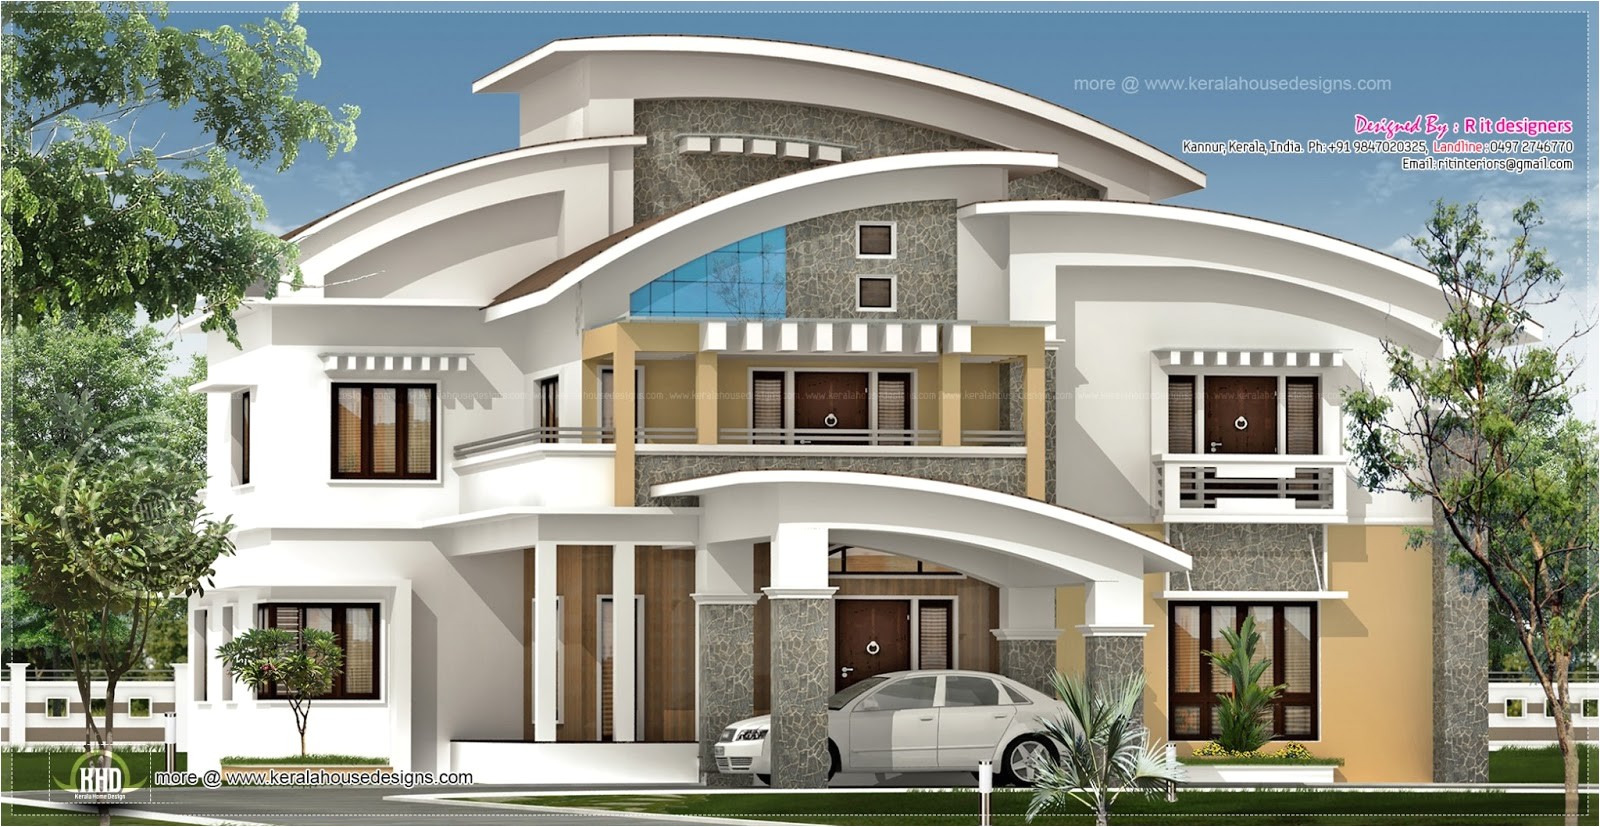 Luxury Home Plans Designs February 2014 House Design Plans